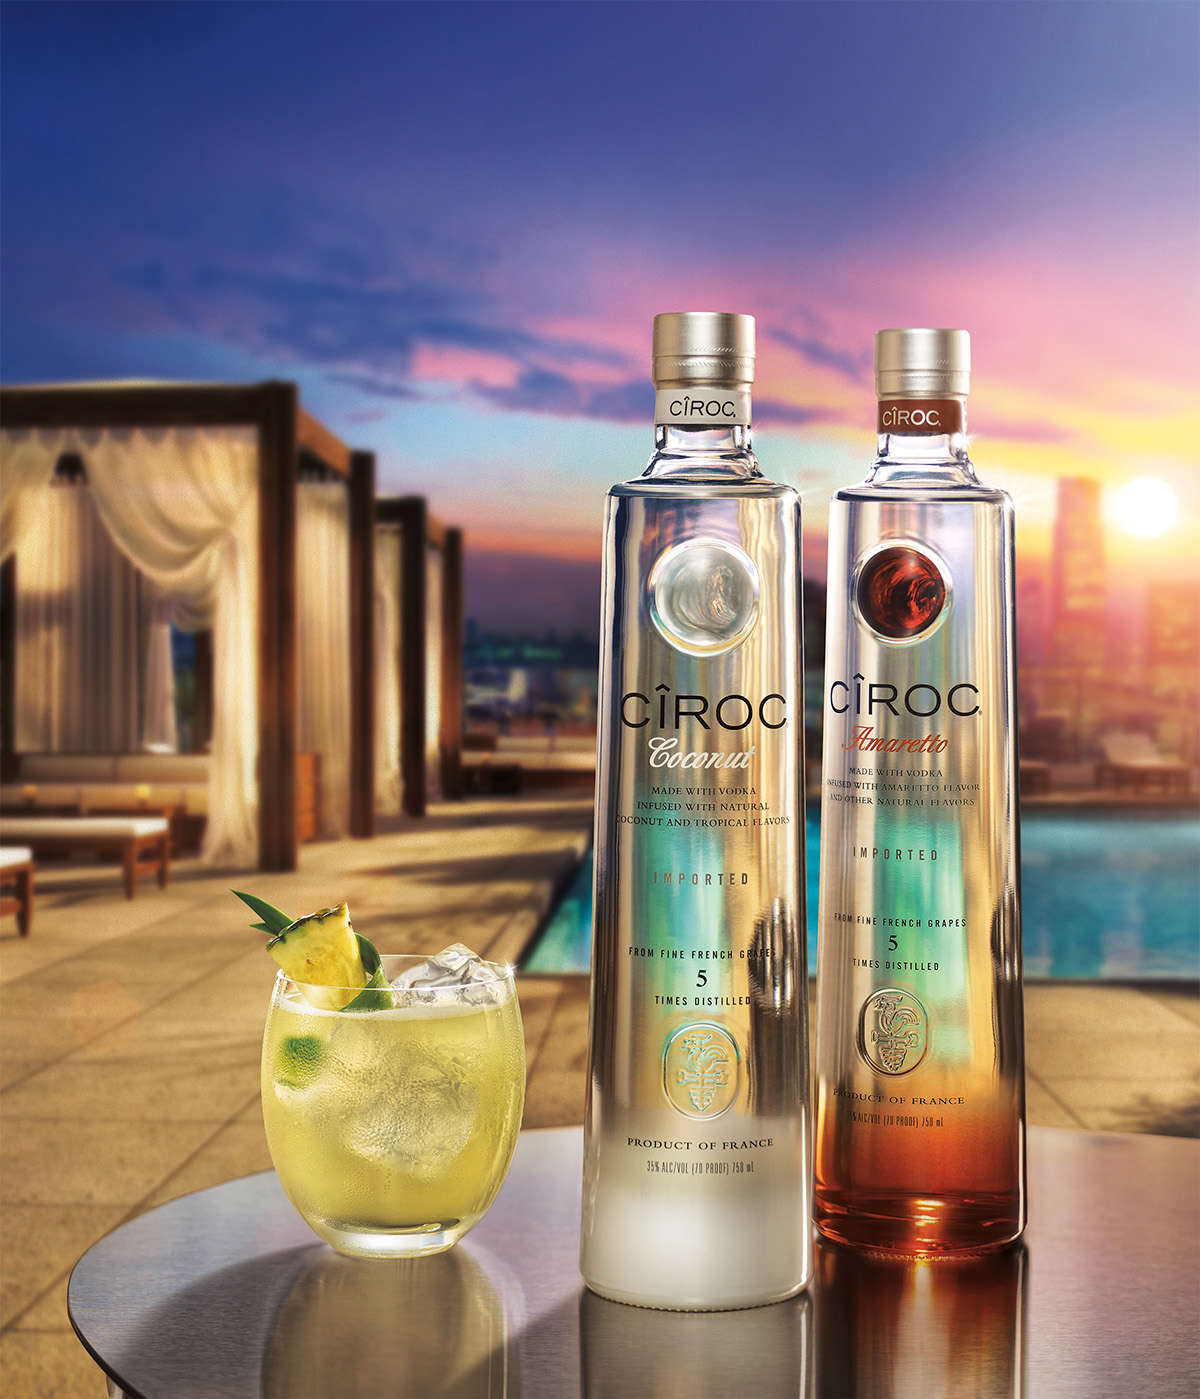 ciroc CGI drinks bottle rooftop cabana location Pool